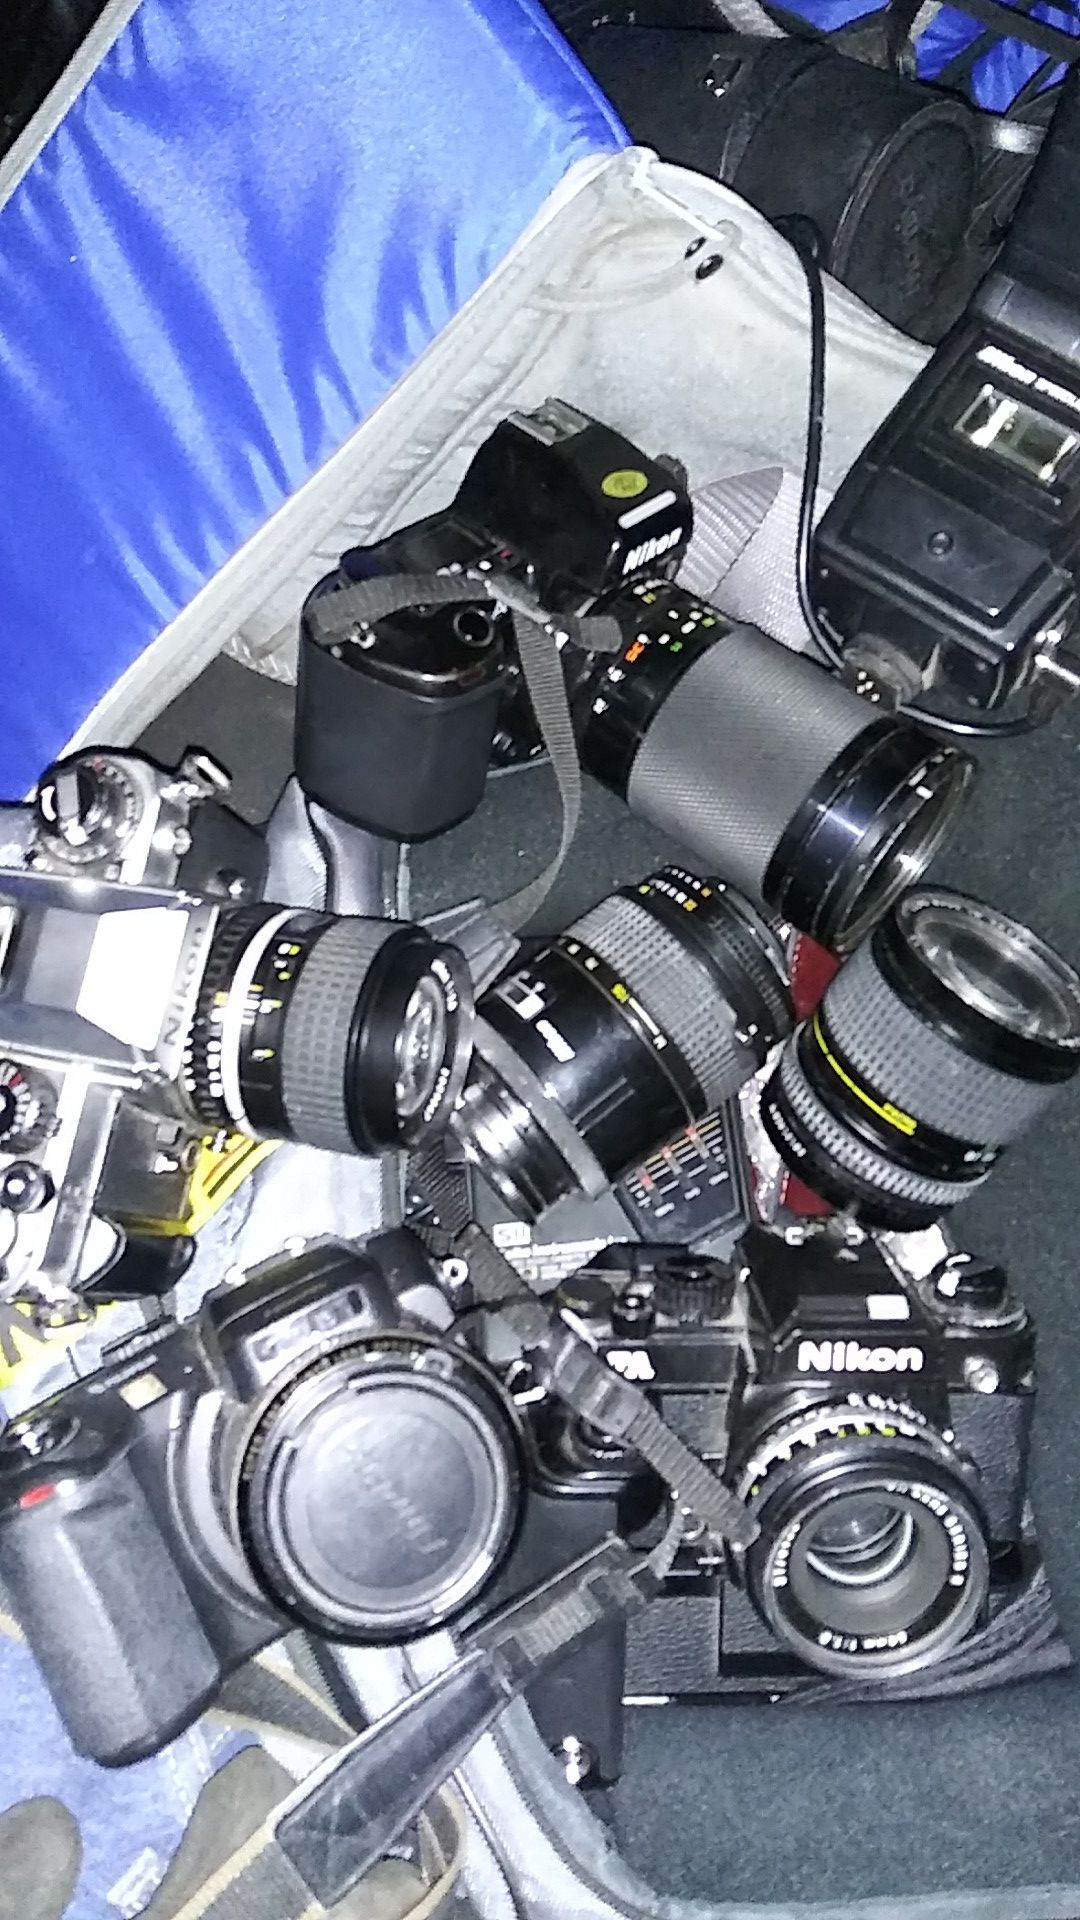 Nikkon camera and lenses.